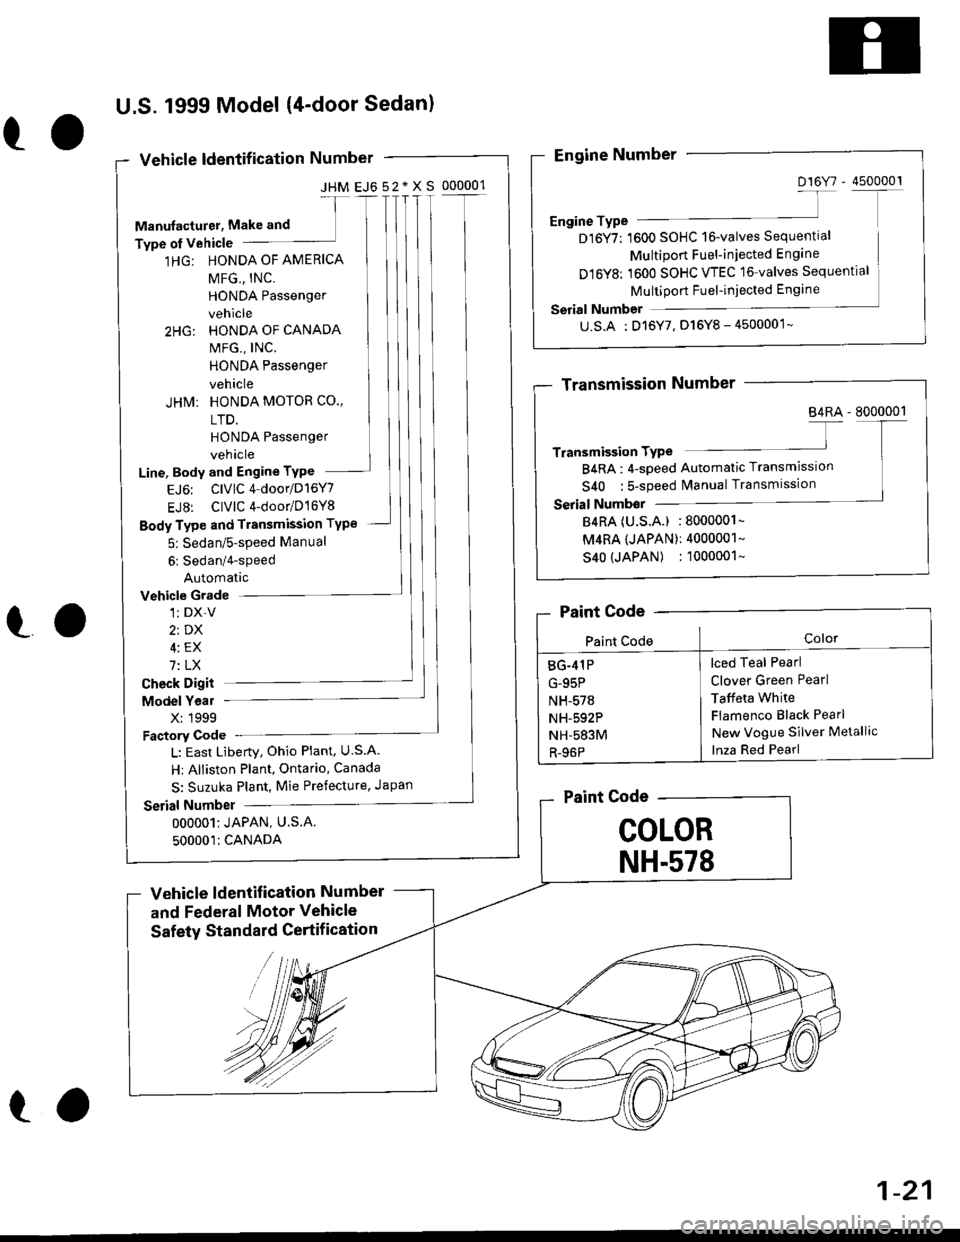 HONDA CIVIC 1999 6.G Owners Manual ro
U.S. 1999 Model (4door Sedan)
Vehicle ldentif ication Number
JHM EJ652*XS 000001-f
Manufacturel, Make and
Type ol vehicle
1HG: HONDA OF AMERICA
Vehicle Gradel: DX-V
2t DX
4: EX
7: LX
HONDA Passen